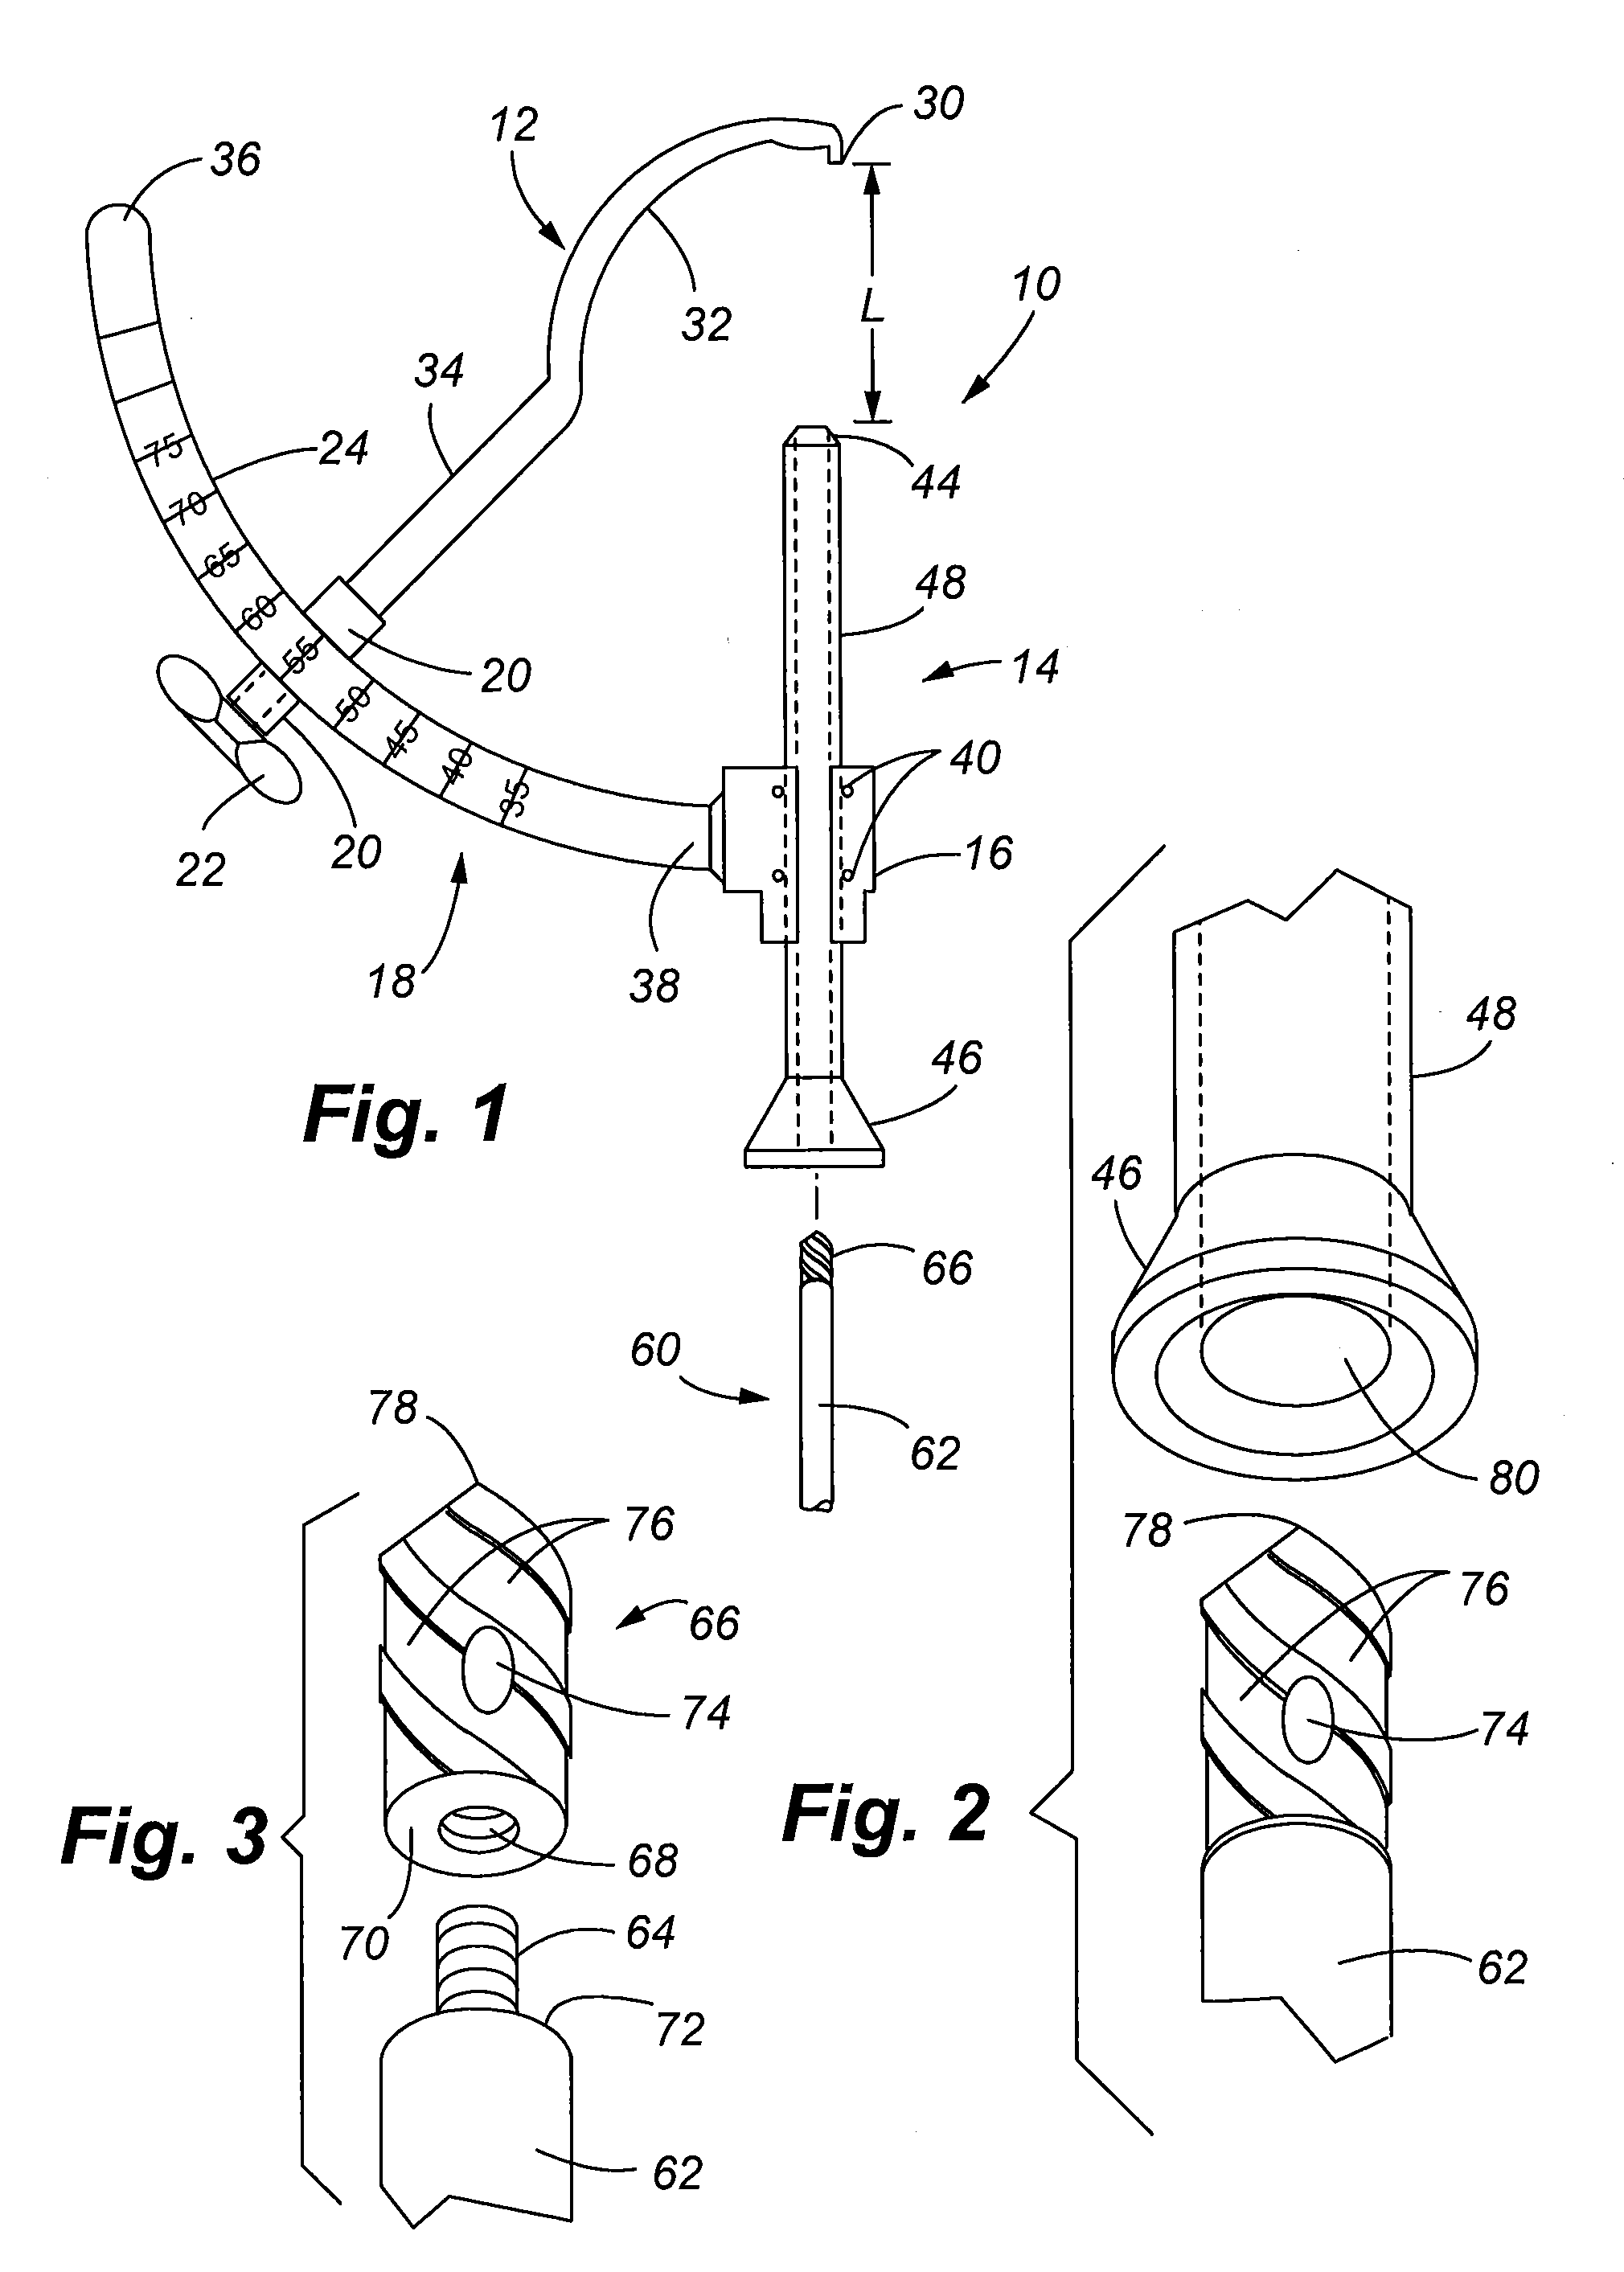 Apparatus and method for arthroscopic transhumeral rotator cuff repair